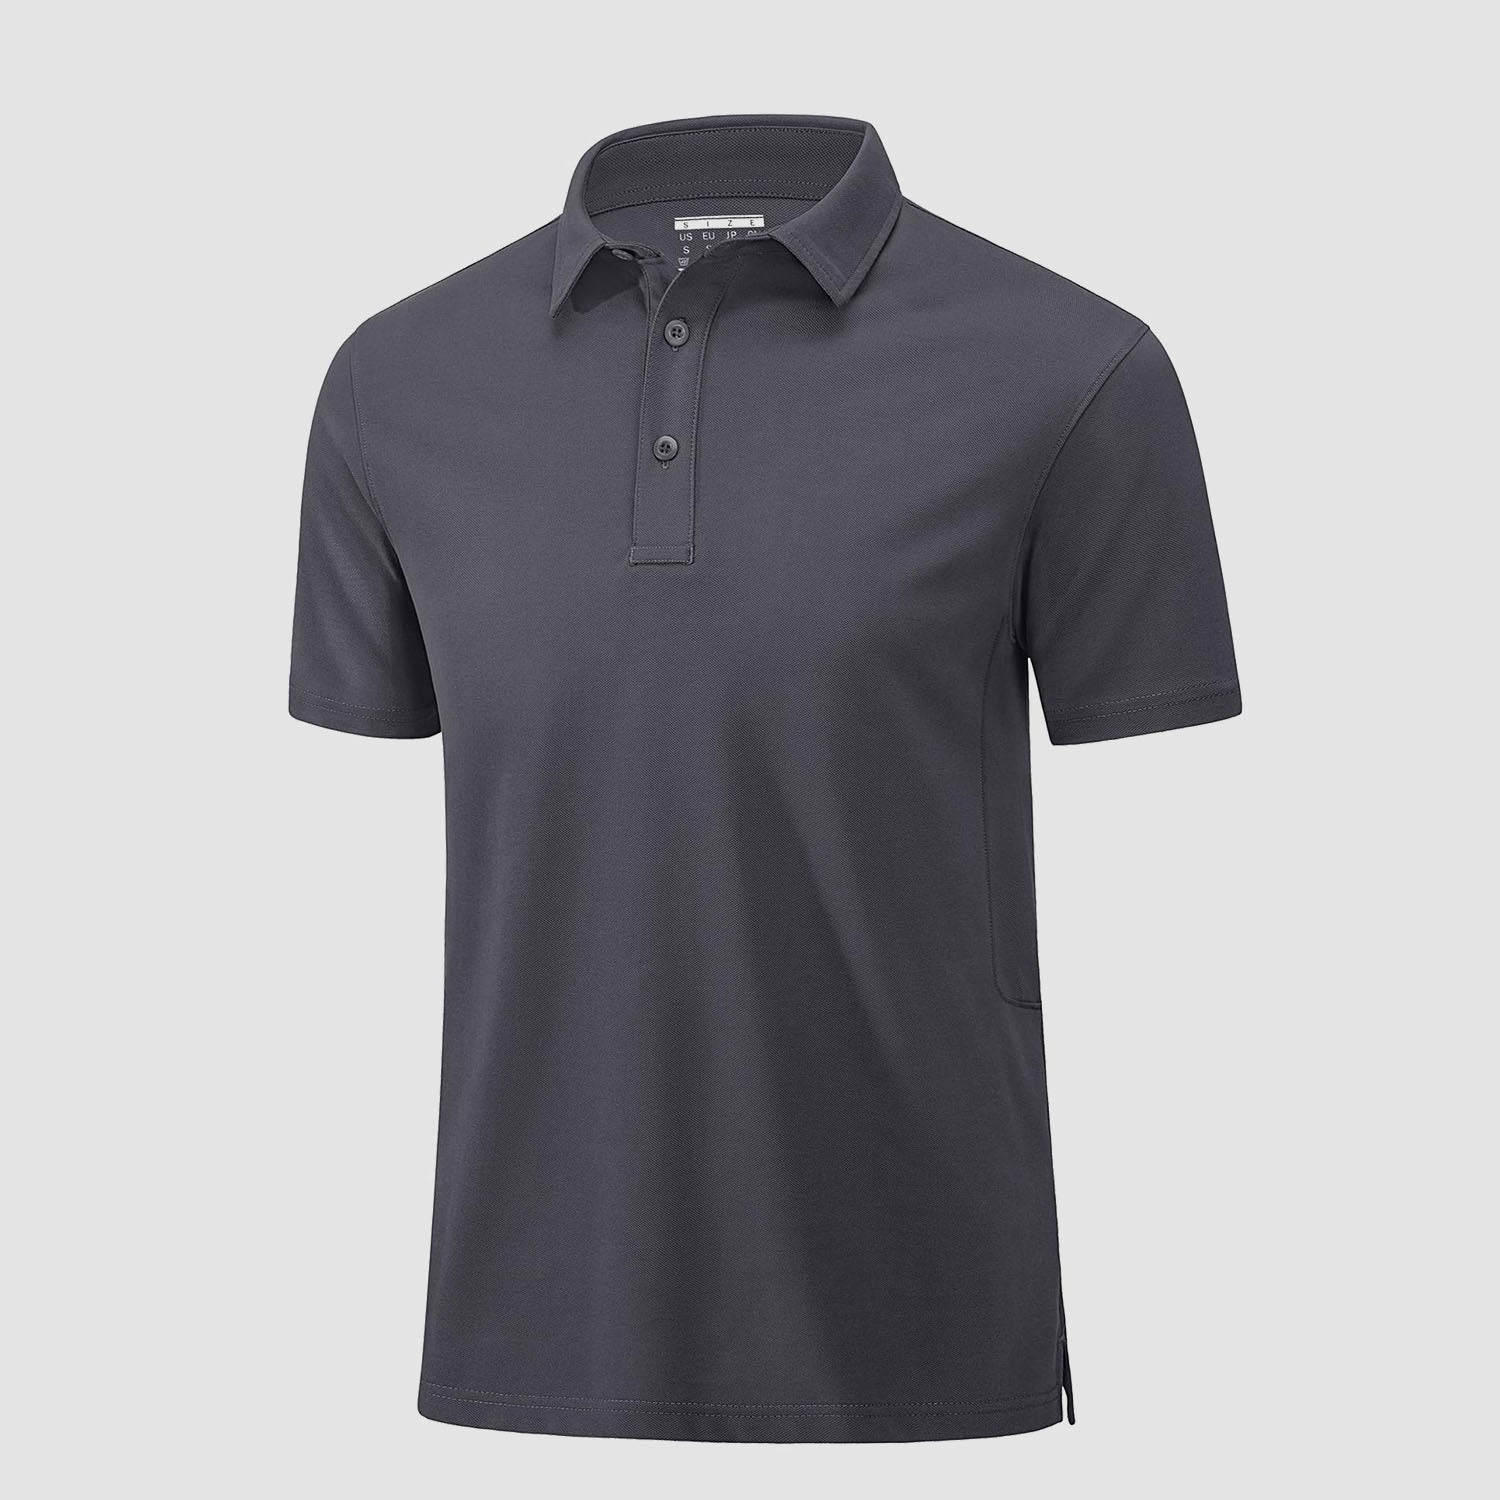 【Buy 4 Get 4th Free】Men's Short Sleeve Golf Polo Shirt